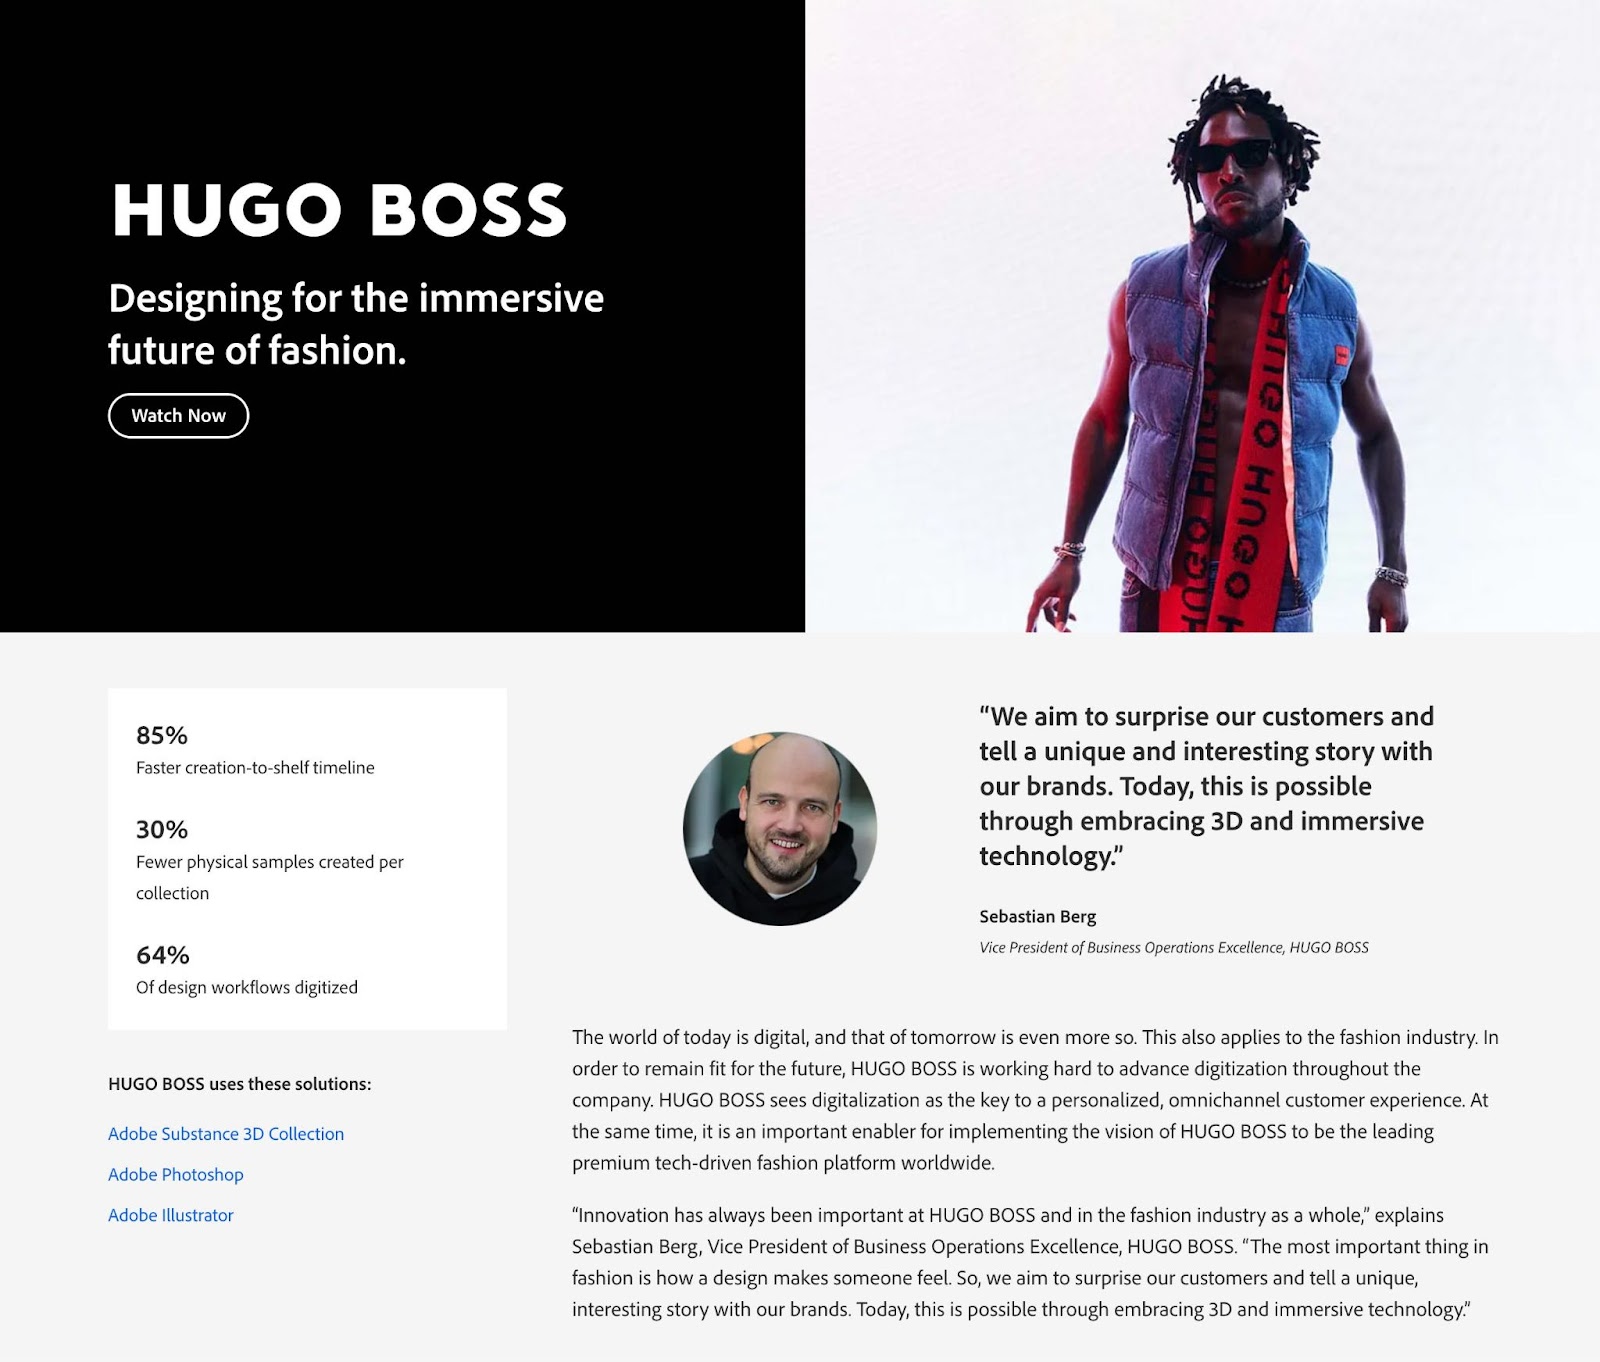 Adobe's case study with Hugo Boss